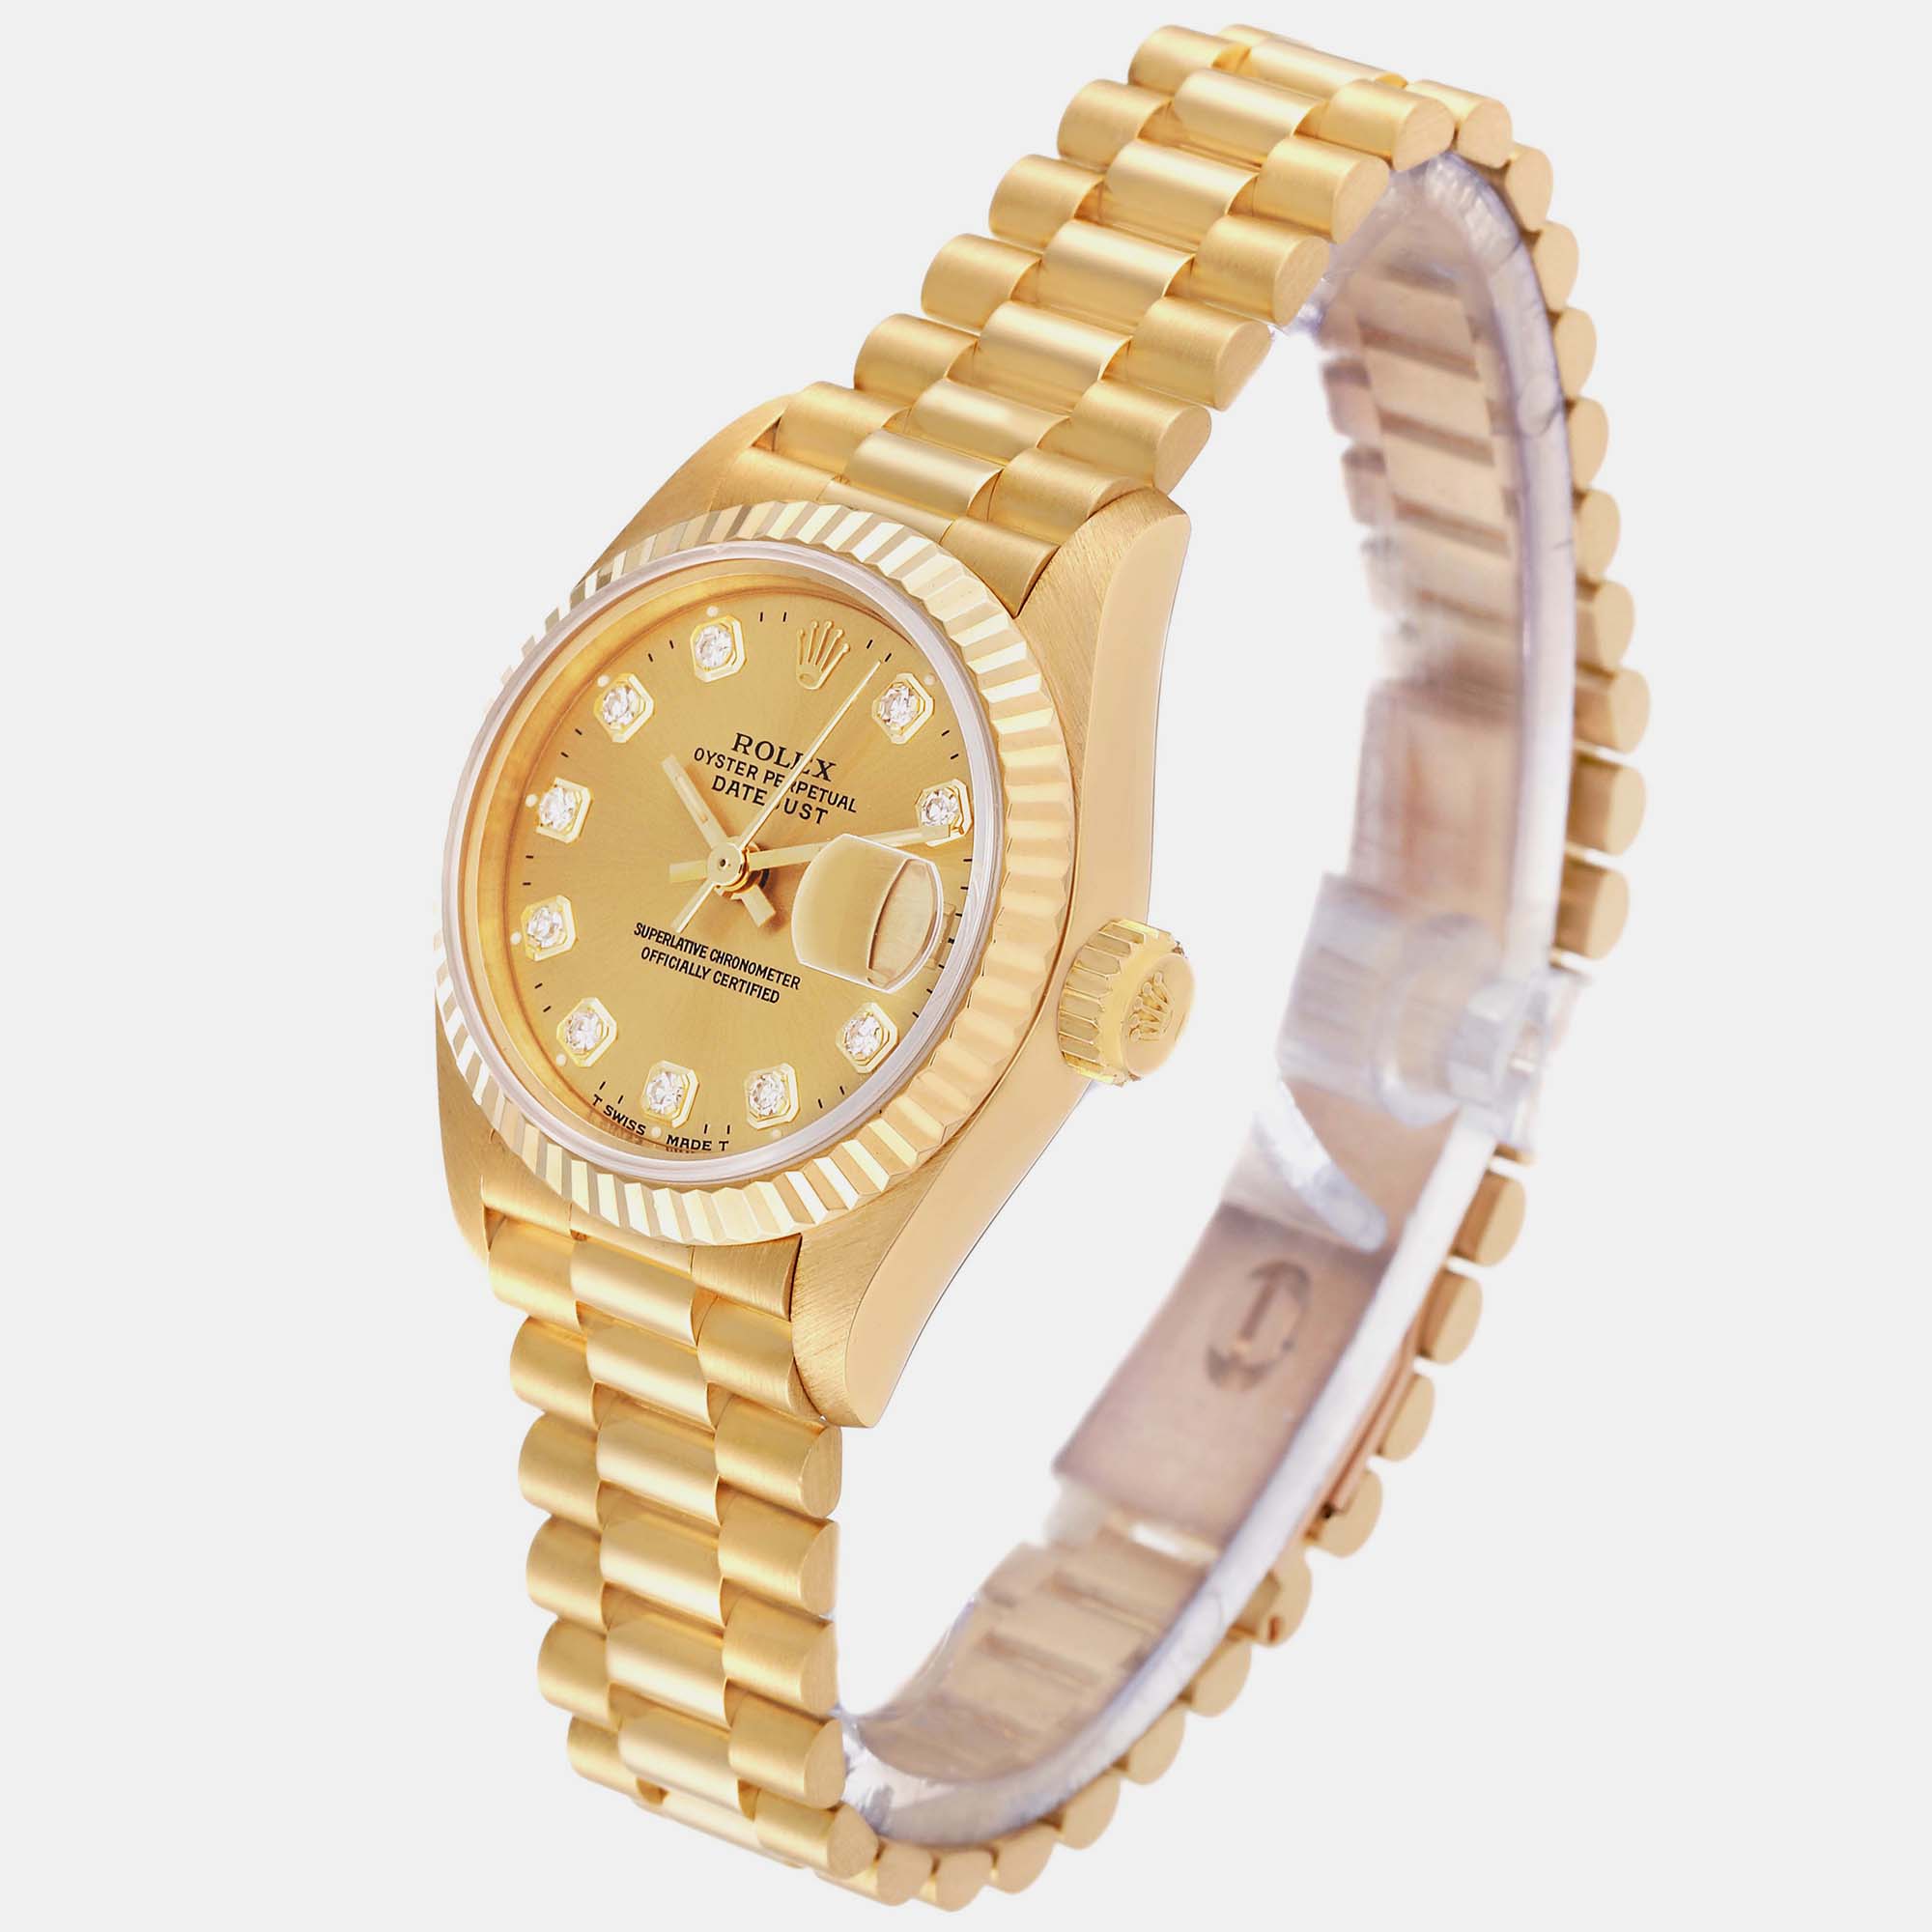 Rolex Datejust President Diamond Dial Yellow Gold Ladies Watch 69178